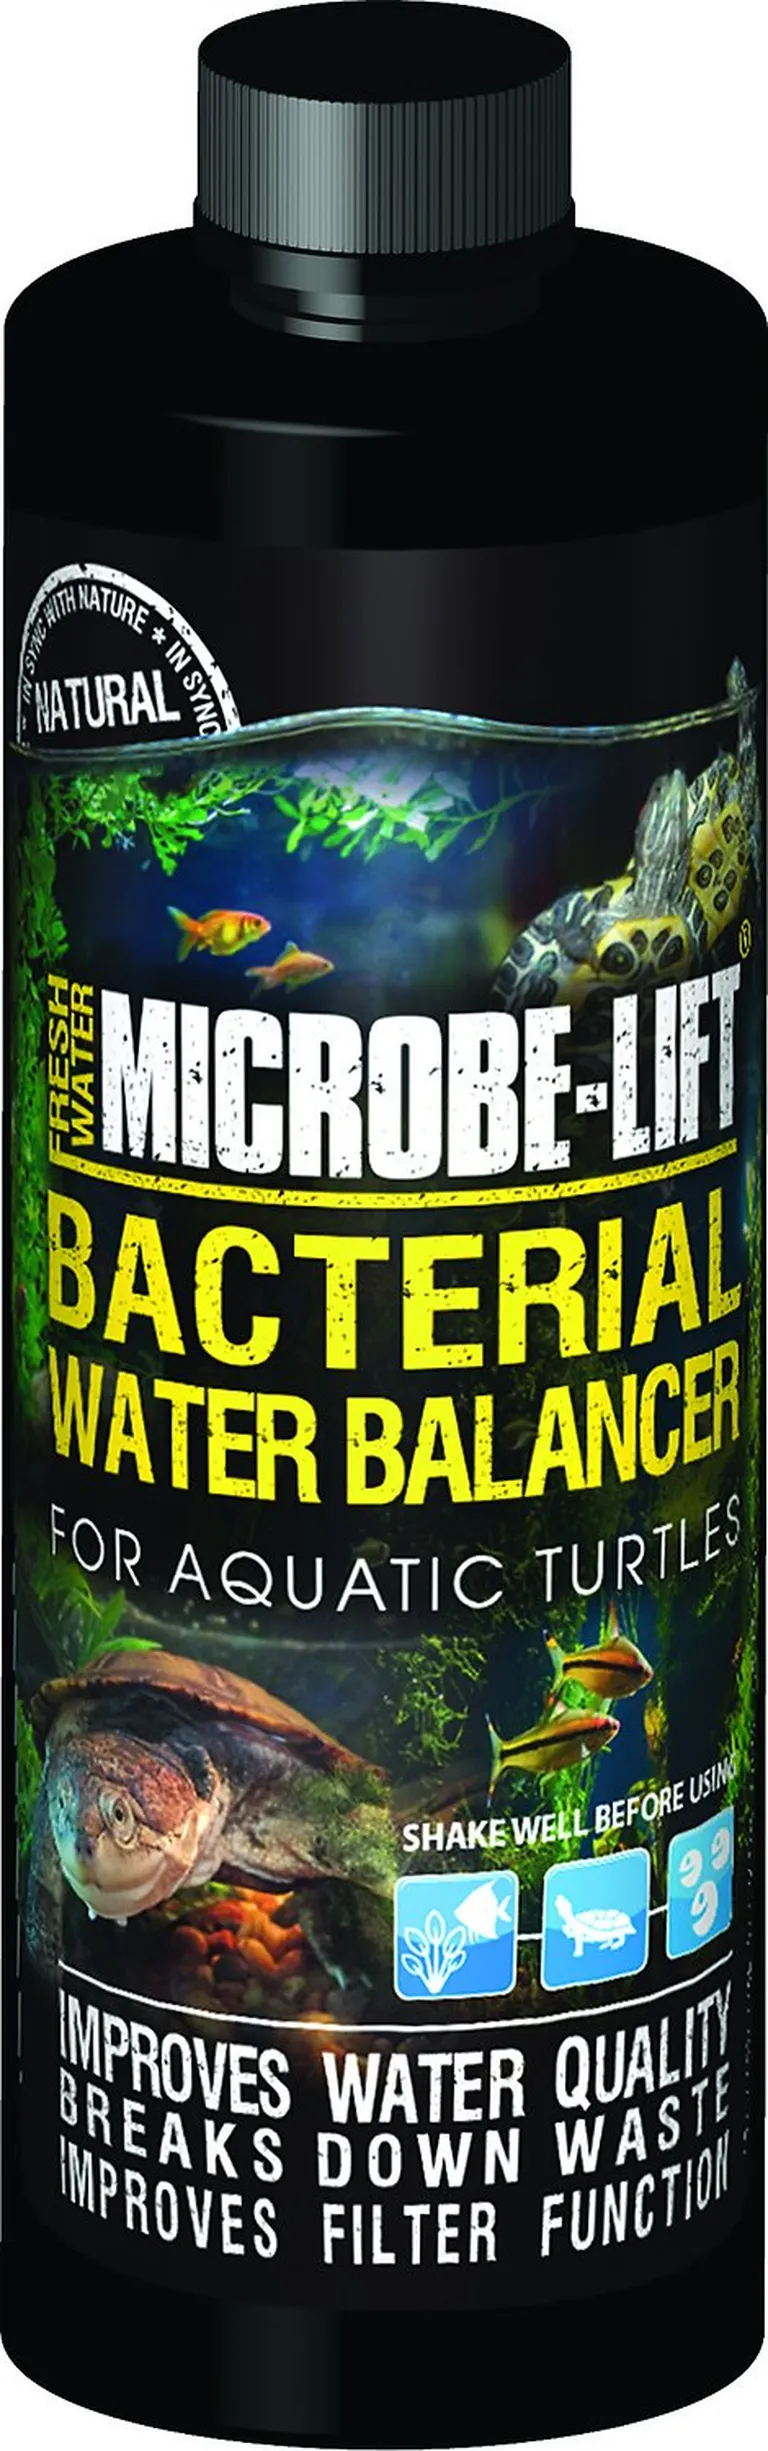 Microbe-Lift Aquatic Turtle Bacterial Water Balancer Photo 1